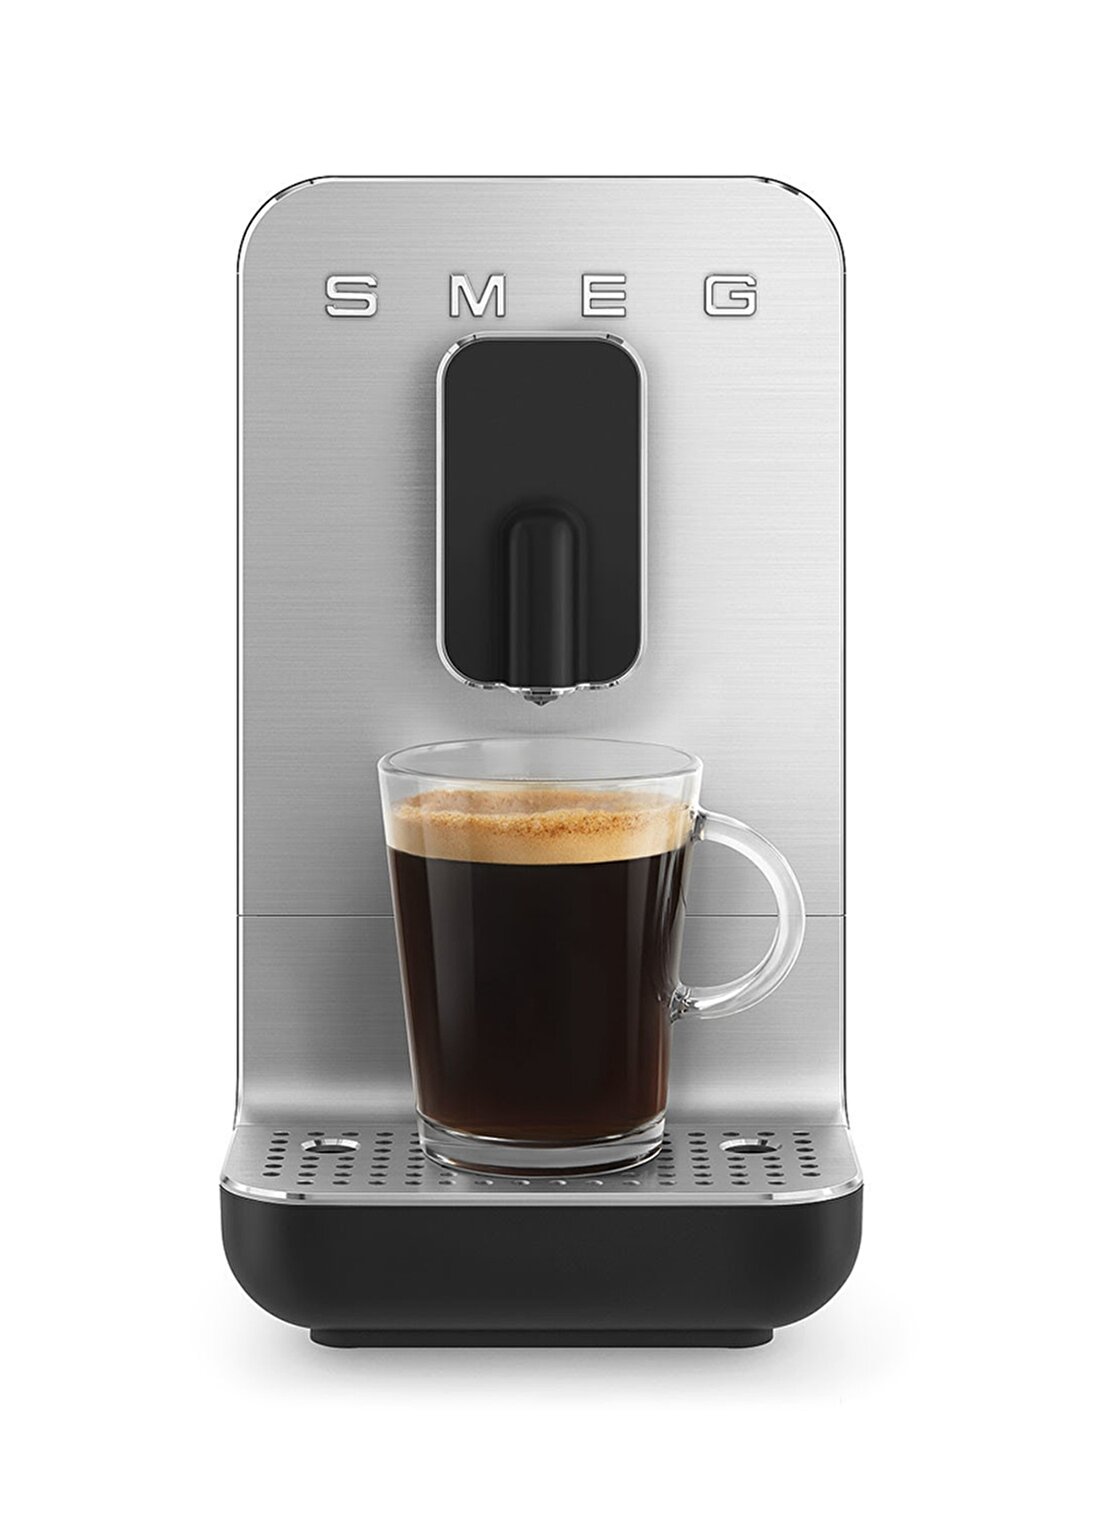 SMEG 50'S Style BCC01 Espresso Otomatikkahve Makinesi Mat Siyah